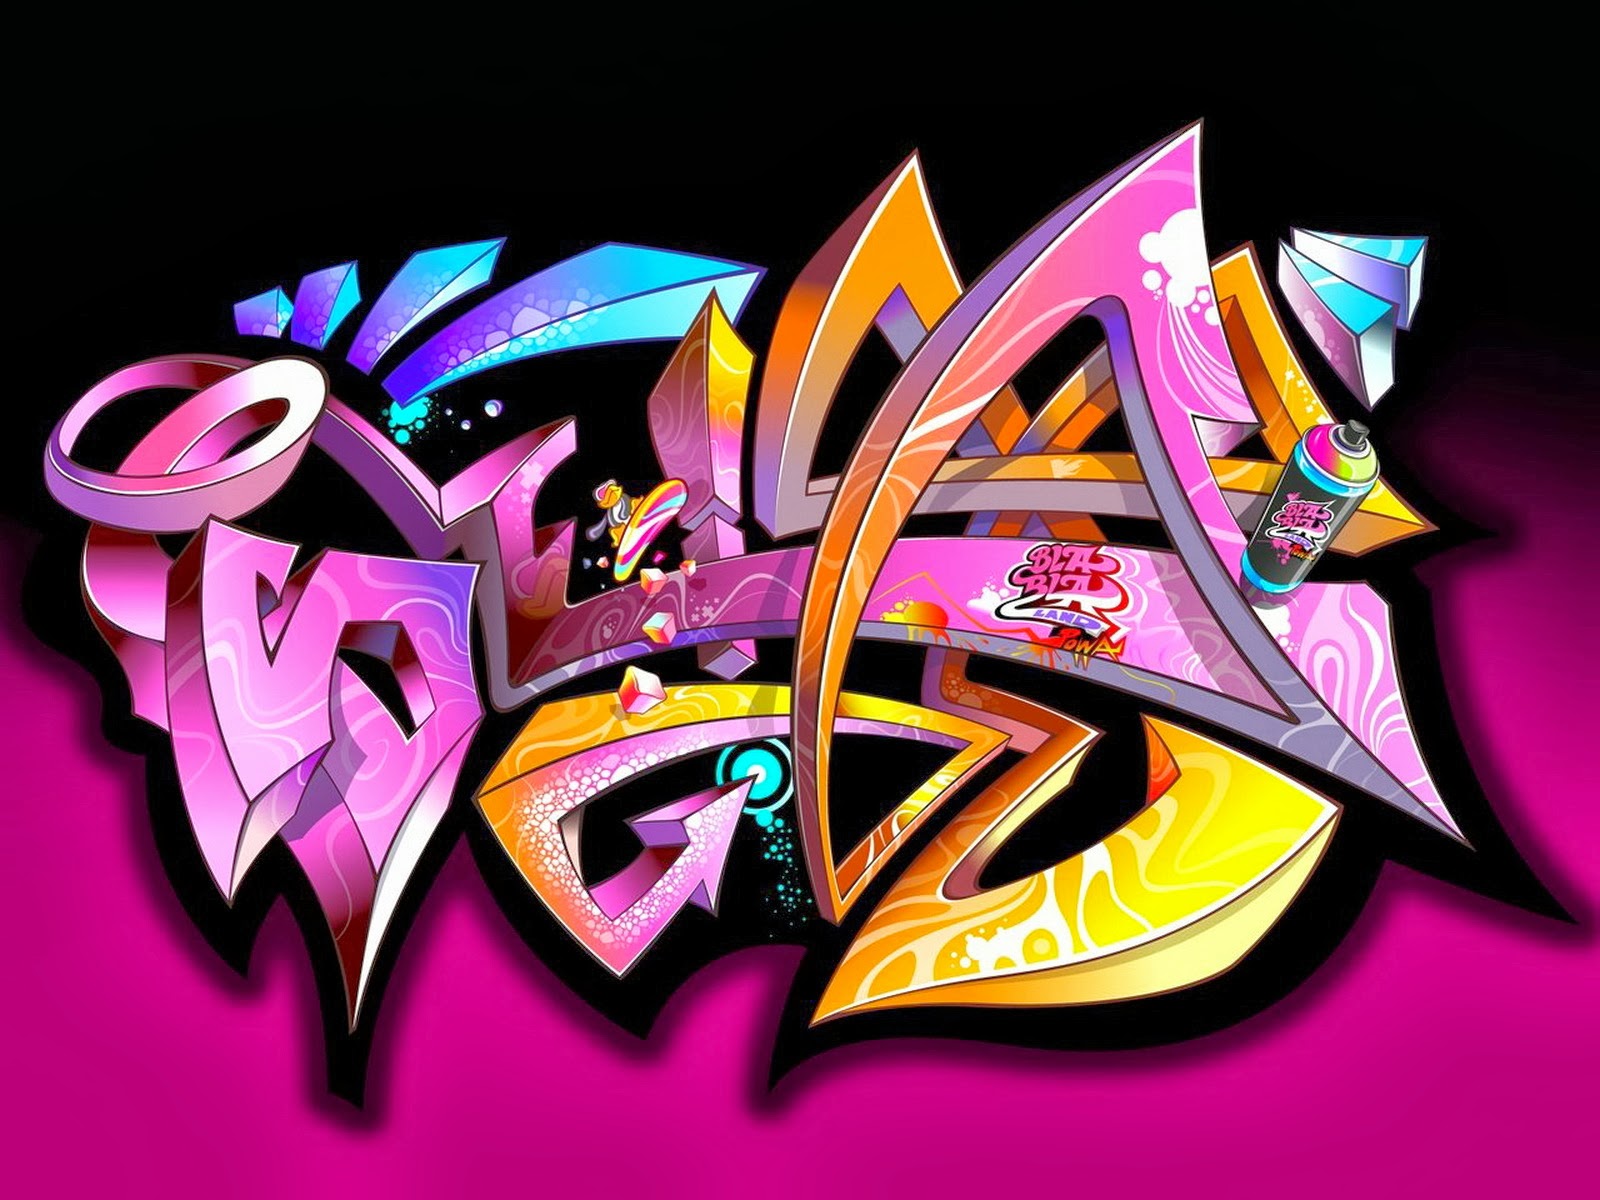 graffiti wallpaper uk,grafikdesign,text,schriftart,graffiti,kunst